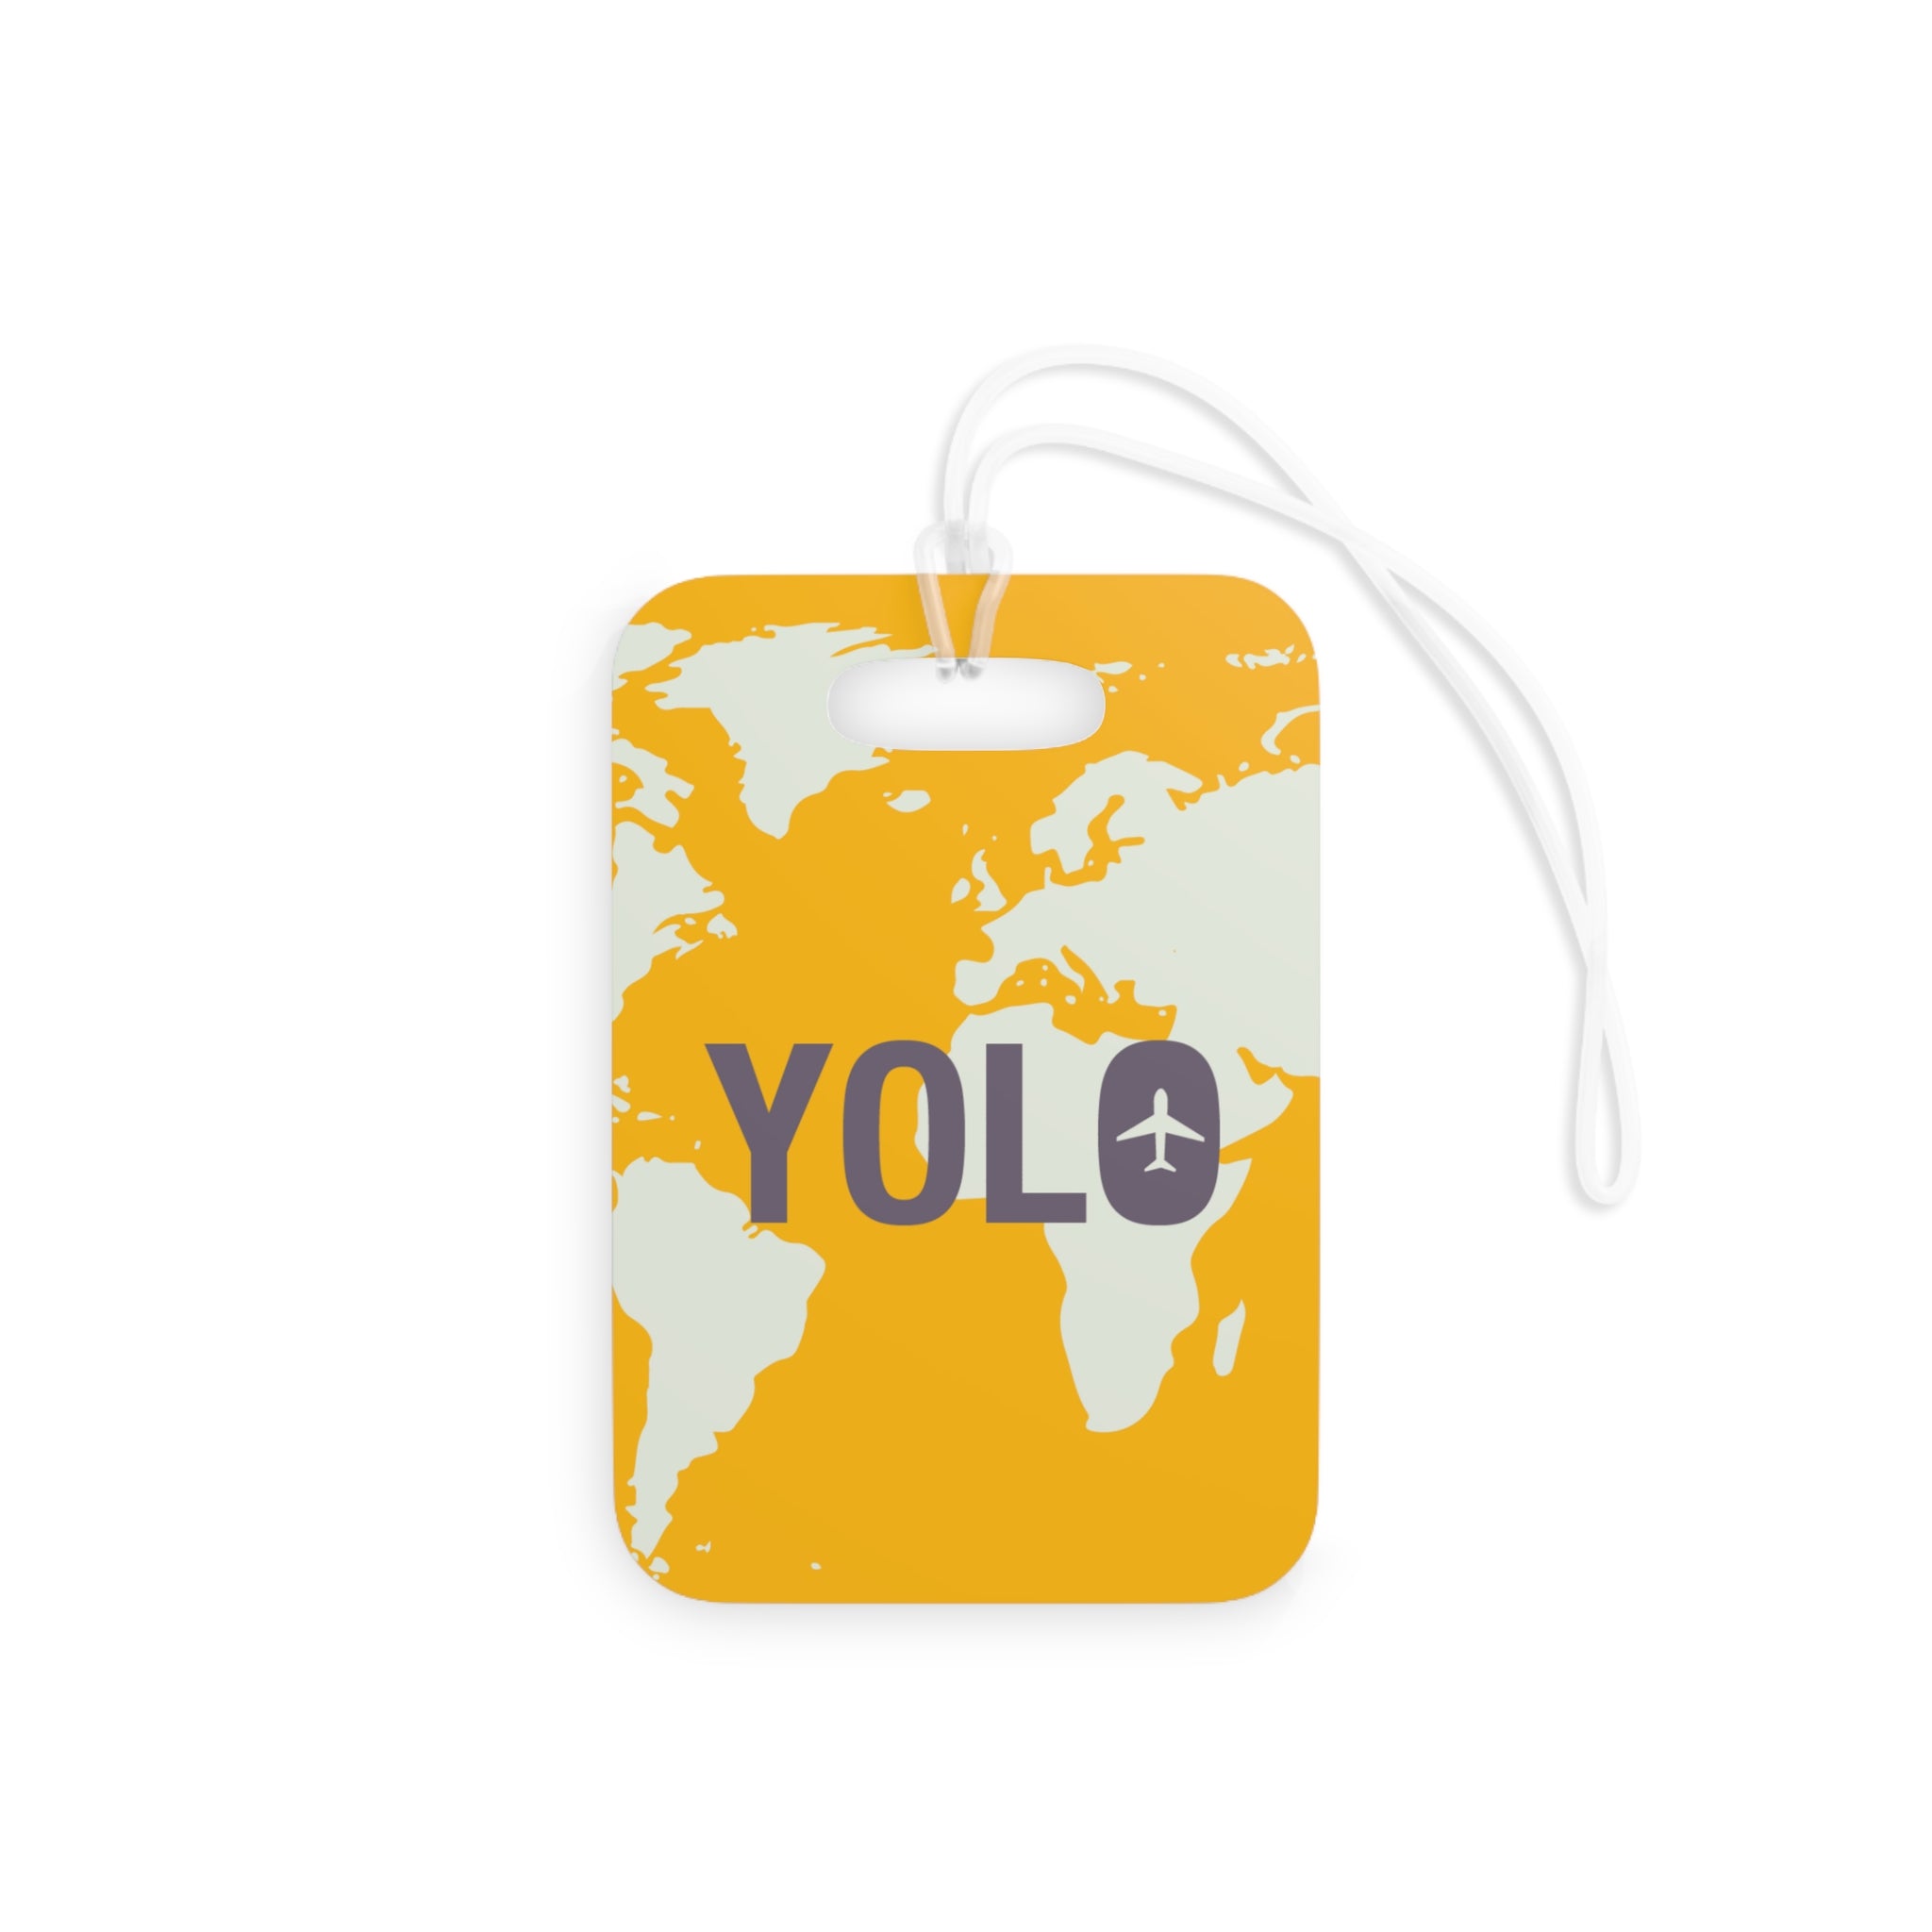 Yolo Luggage Tag (Yellow)